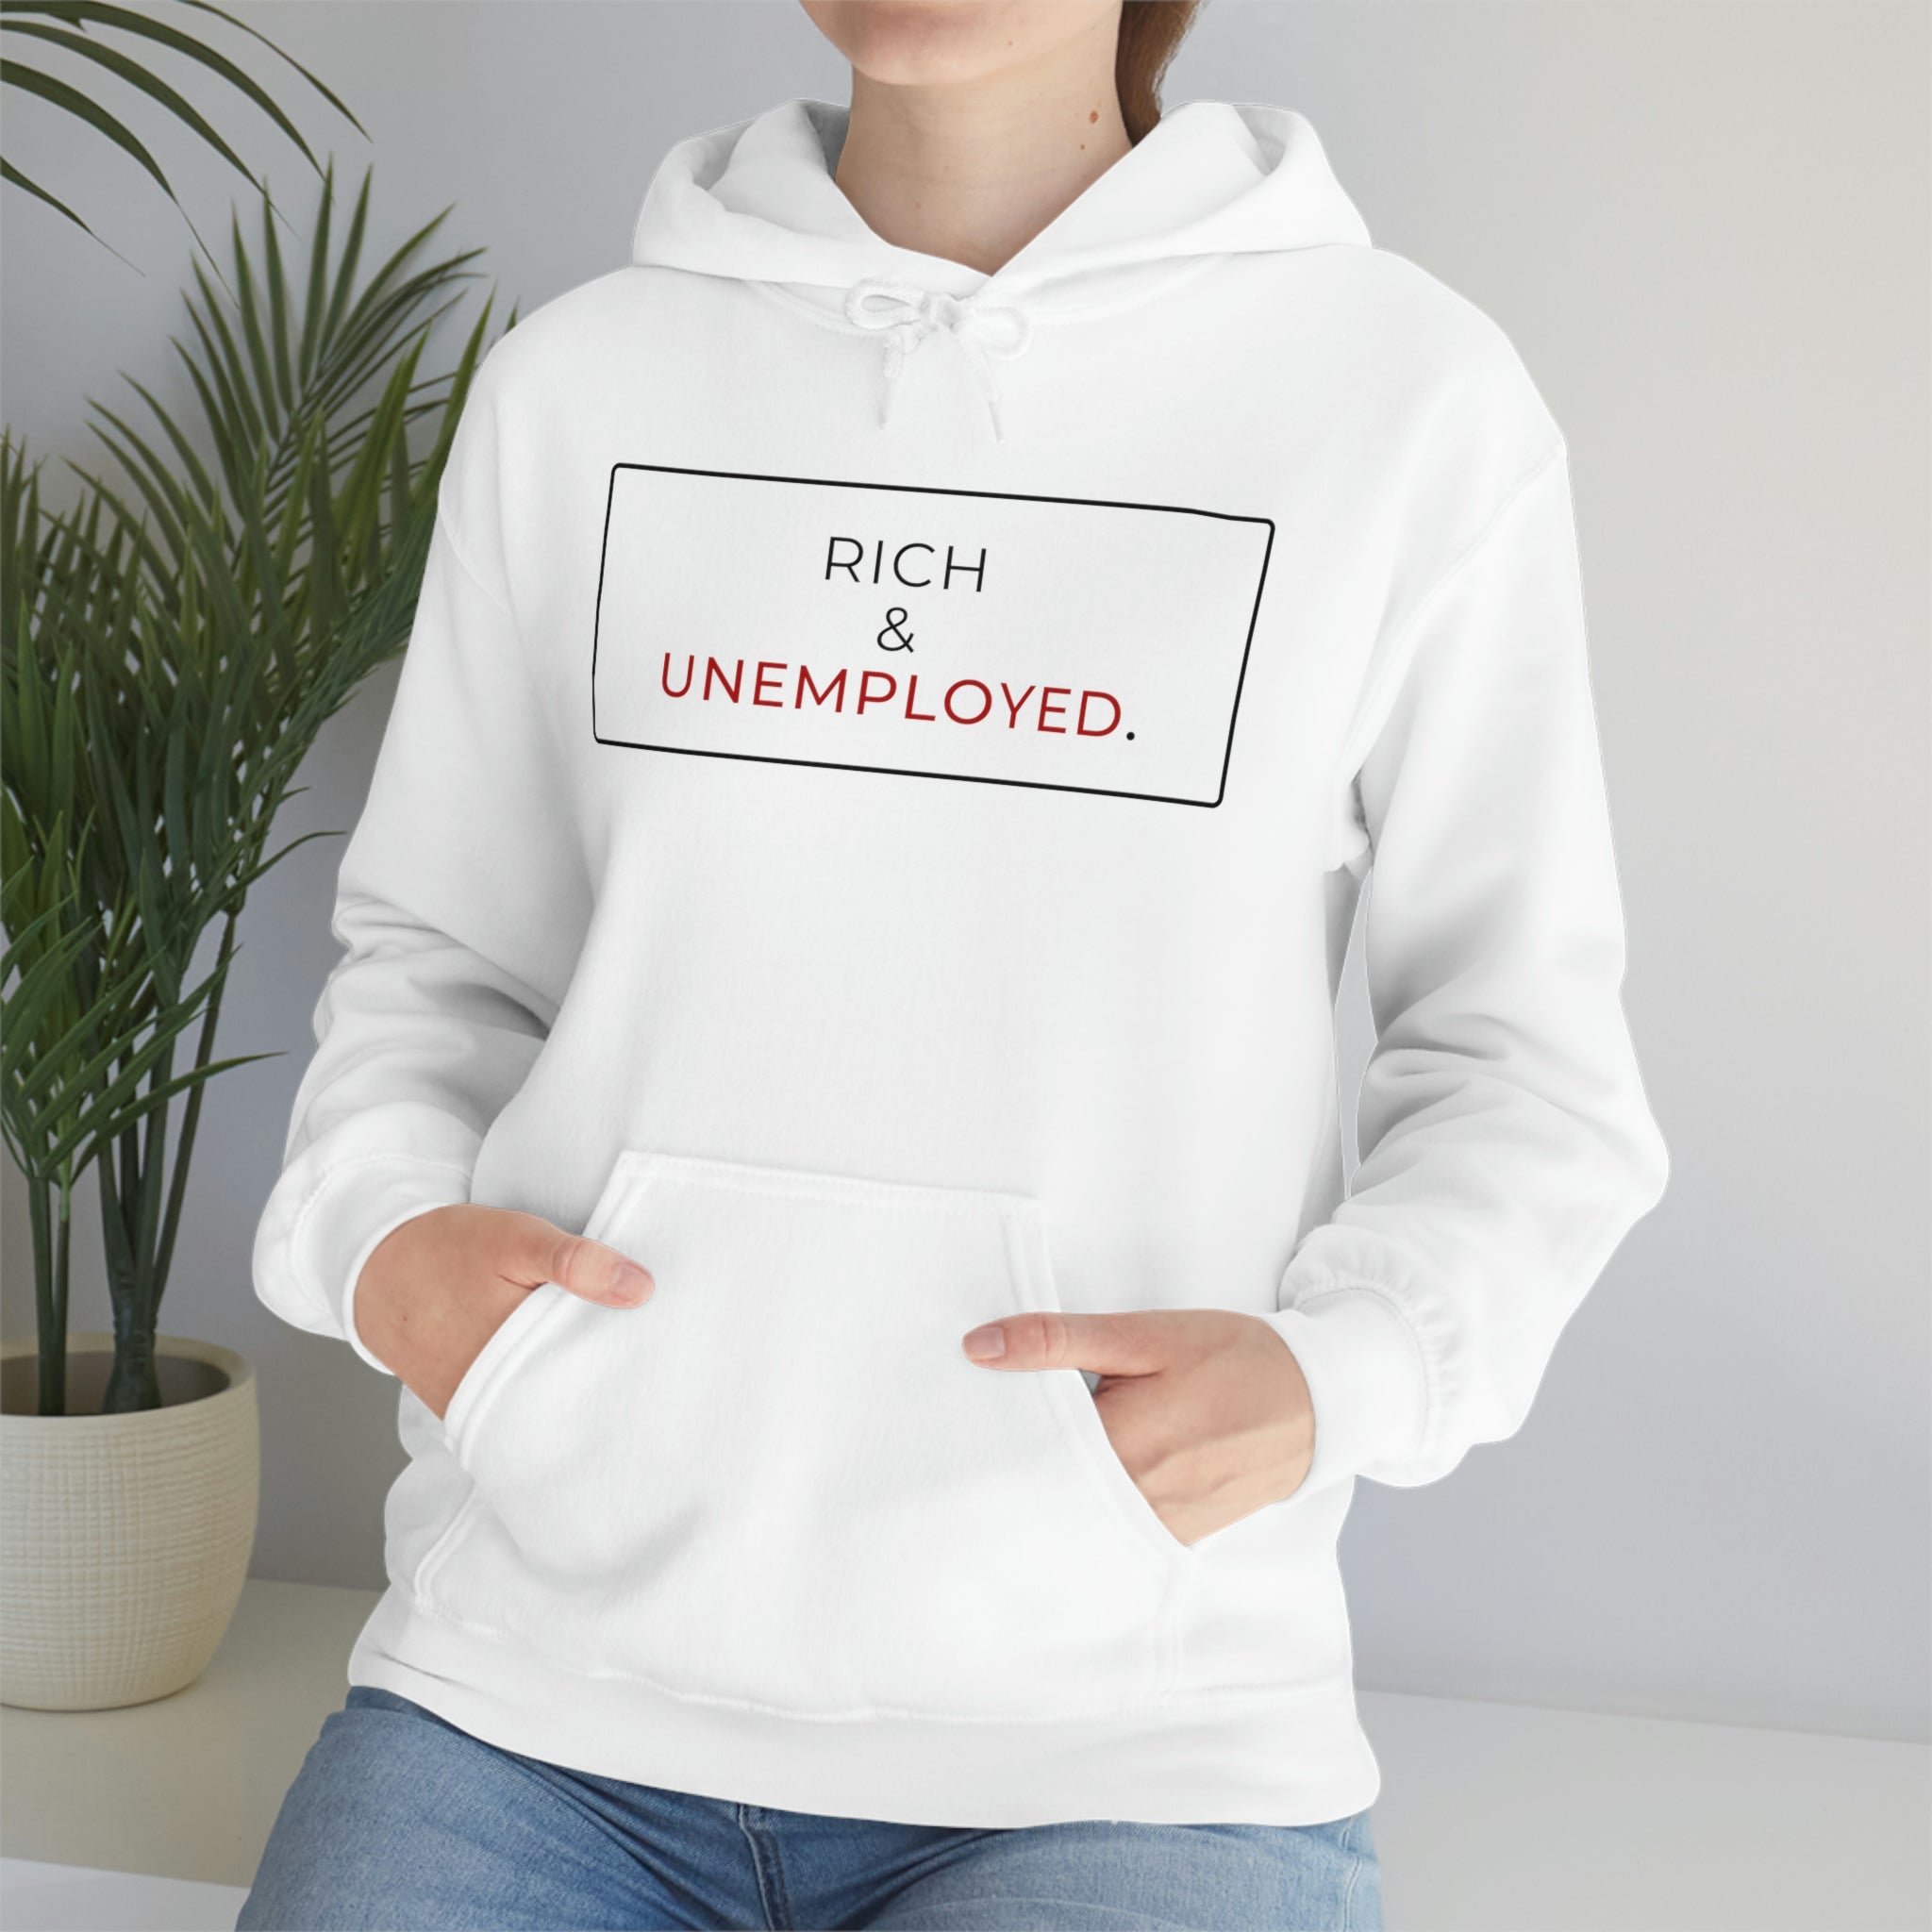 Rich & Unemployed Hooded Sweatshirt